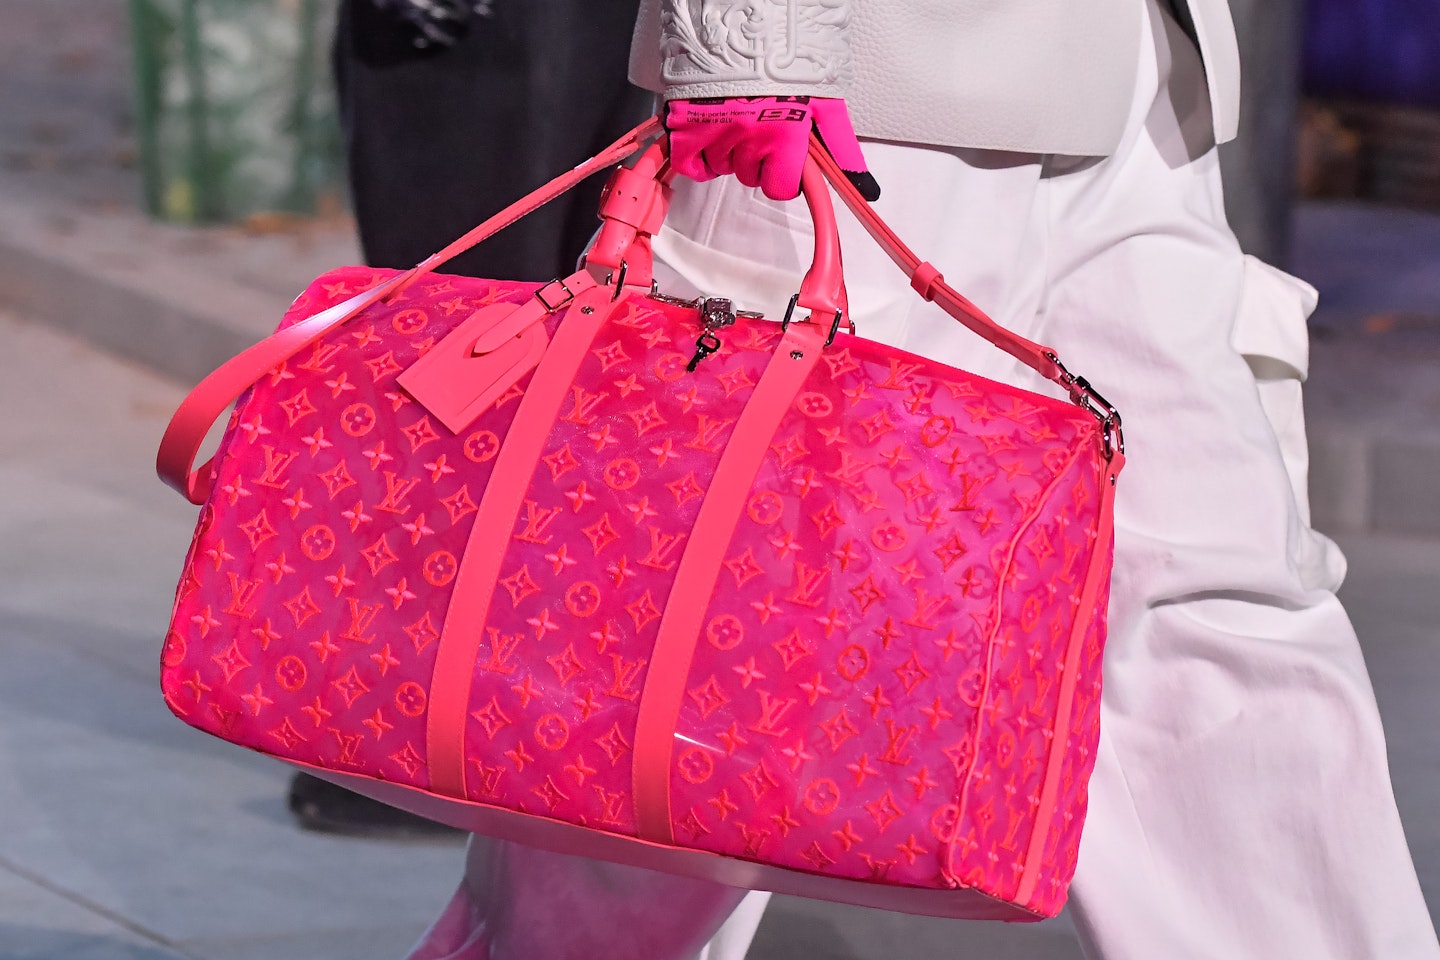 Louis Vuitton's New Glow-in-the-dark Bag